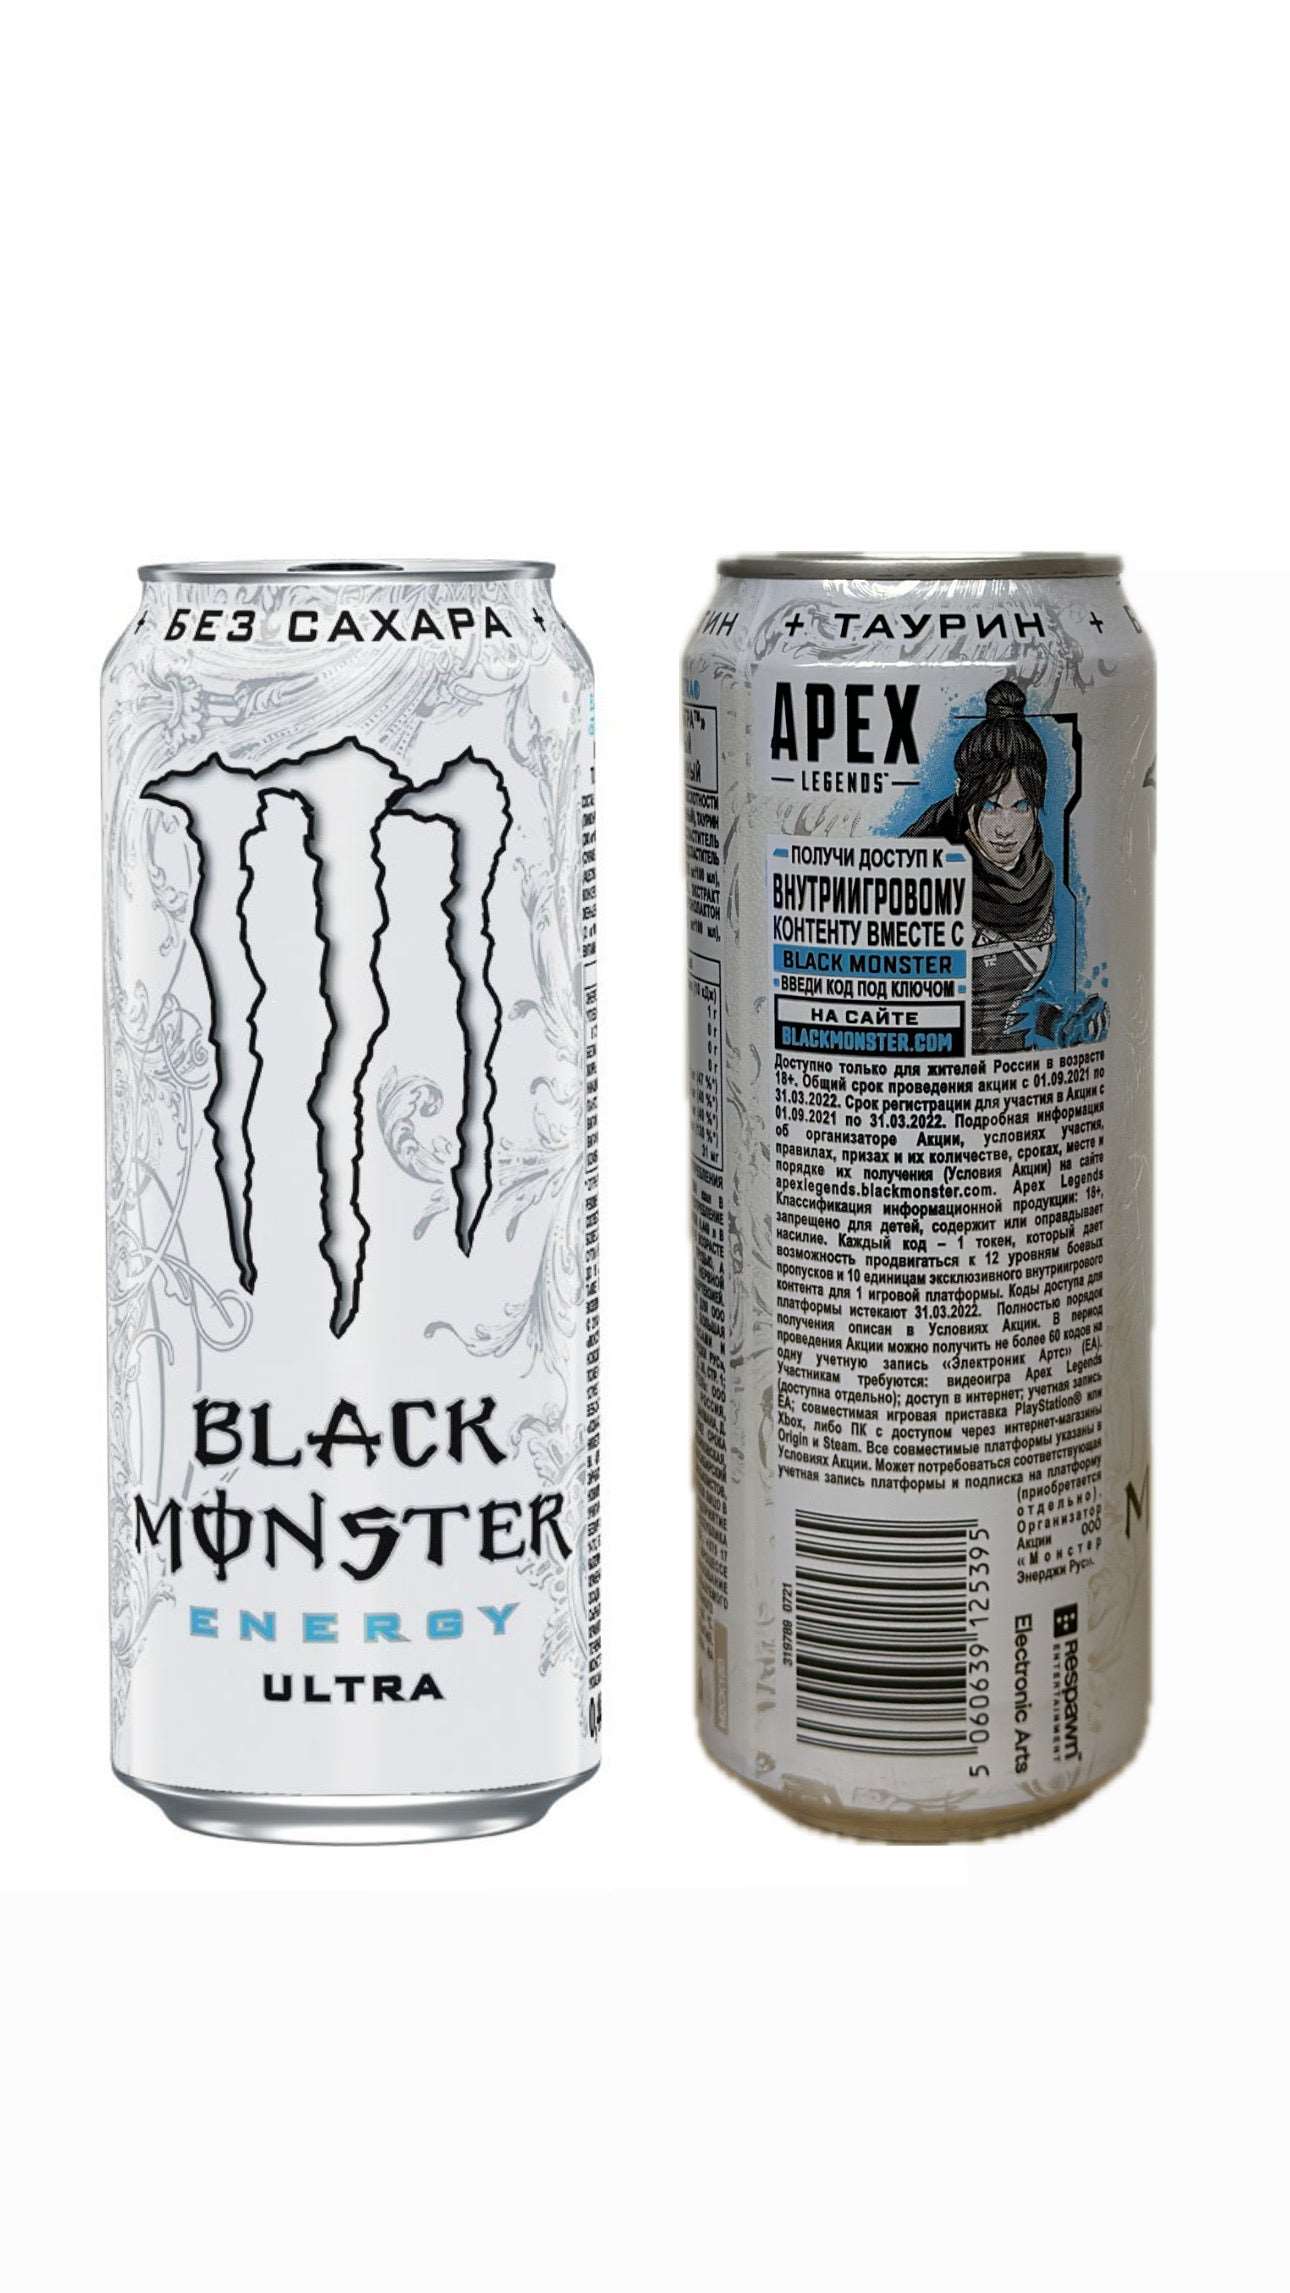 Black Monster Energy Ultra Apex Design Russia - sku: 0721